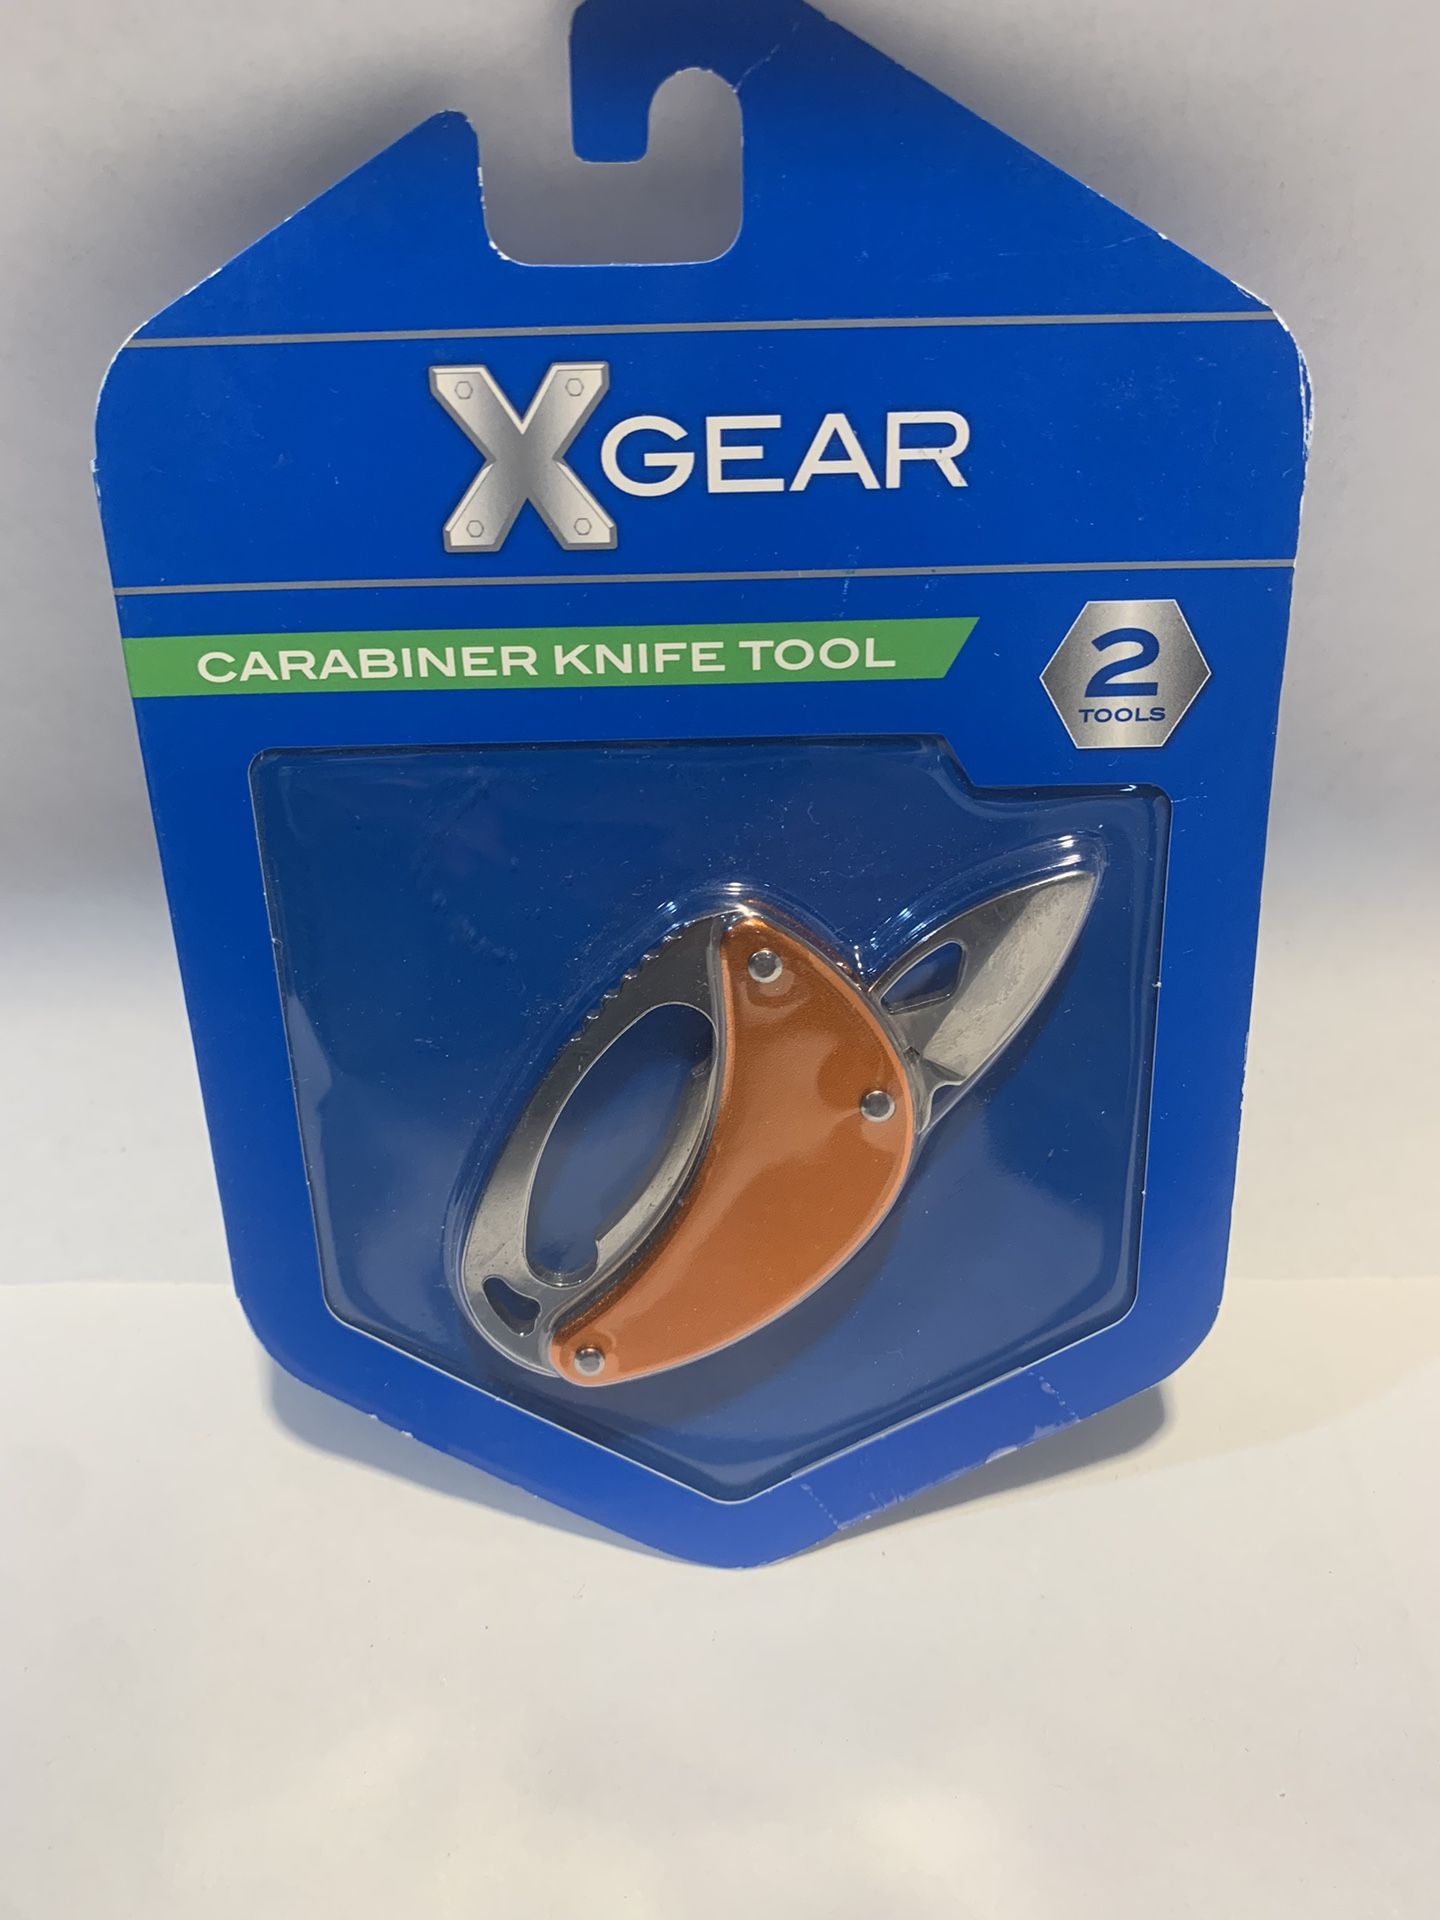 X-GEAR Carabiner Knife Tool Orange 2 Tools Survival Camping Hiking